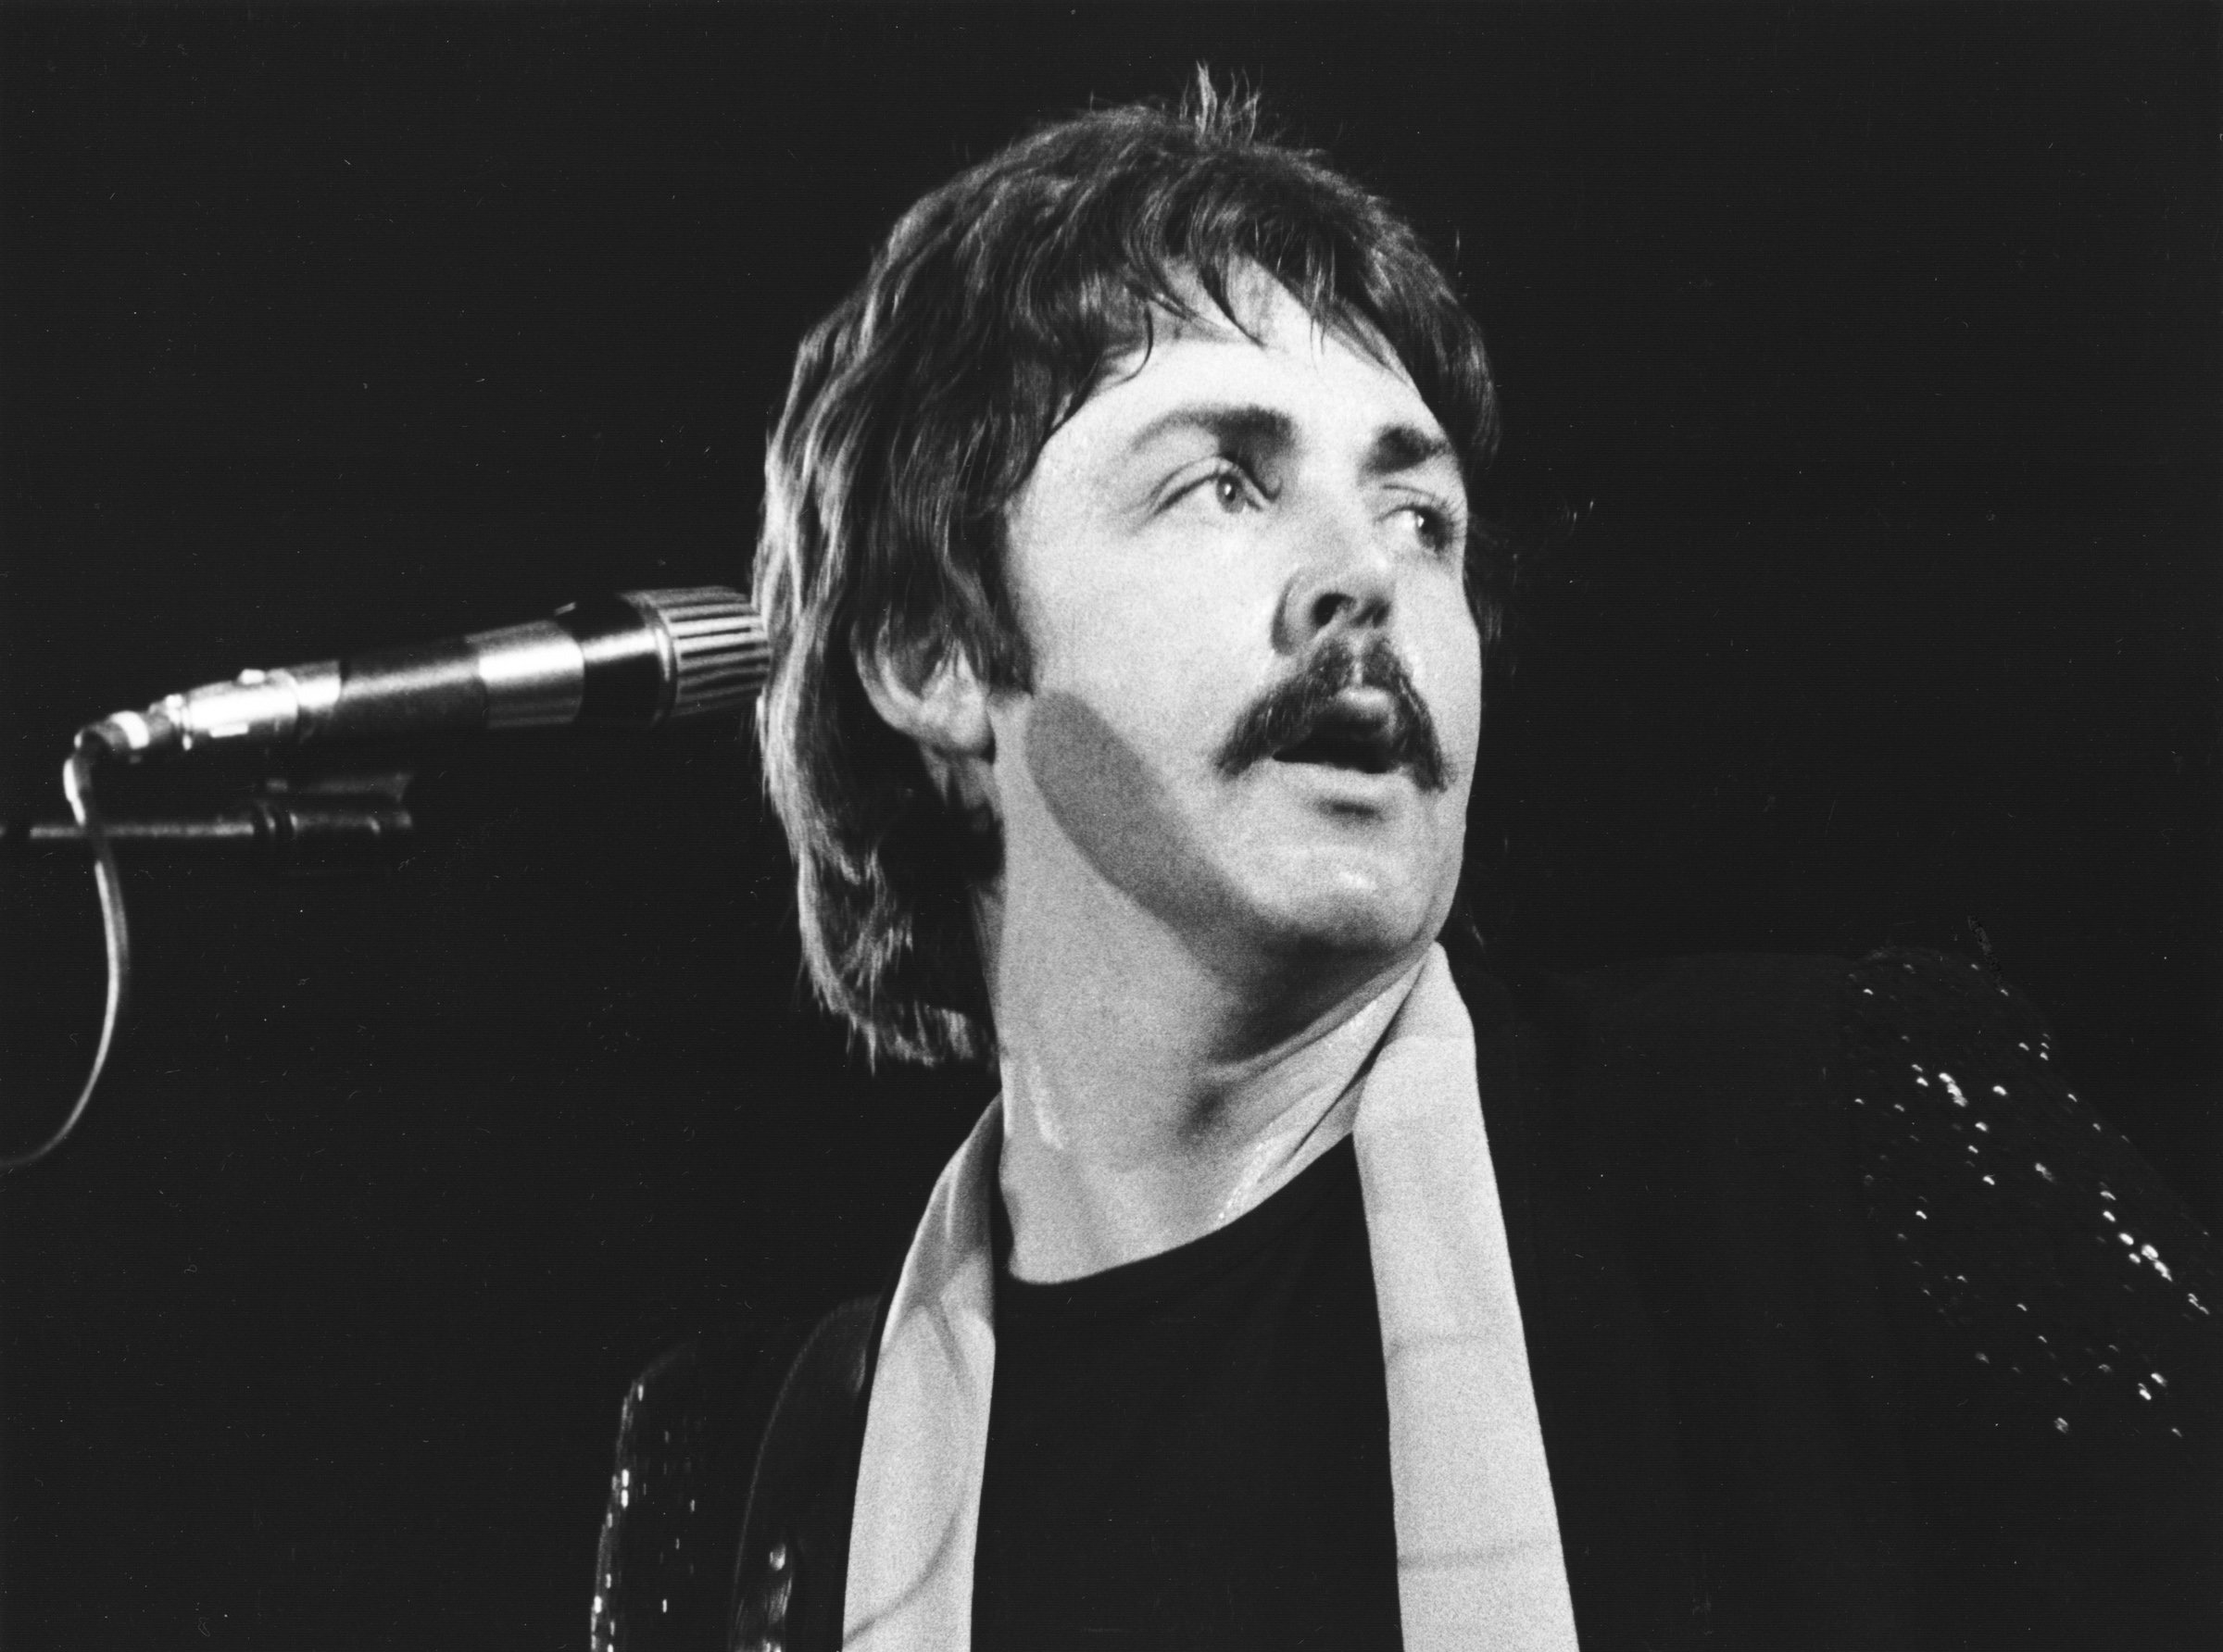 Paul McCartney performing with Wings in 1976